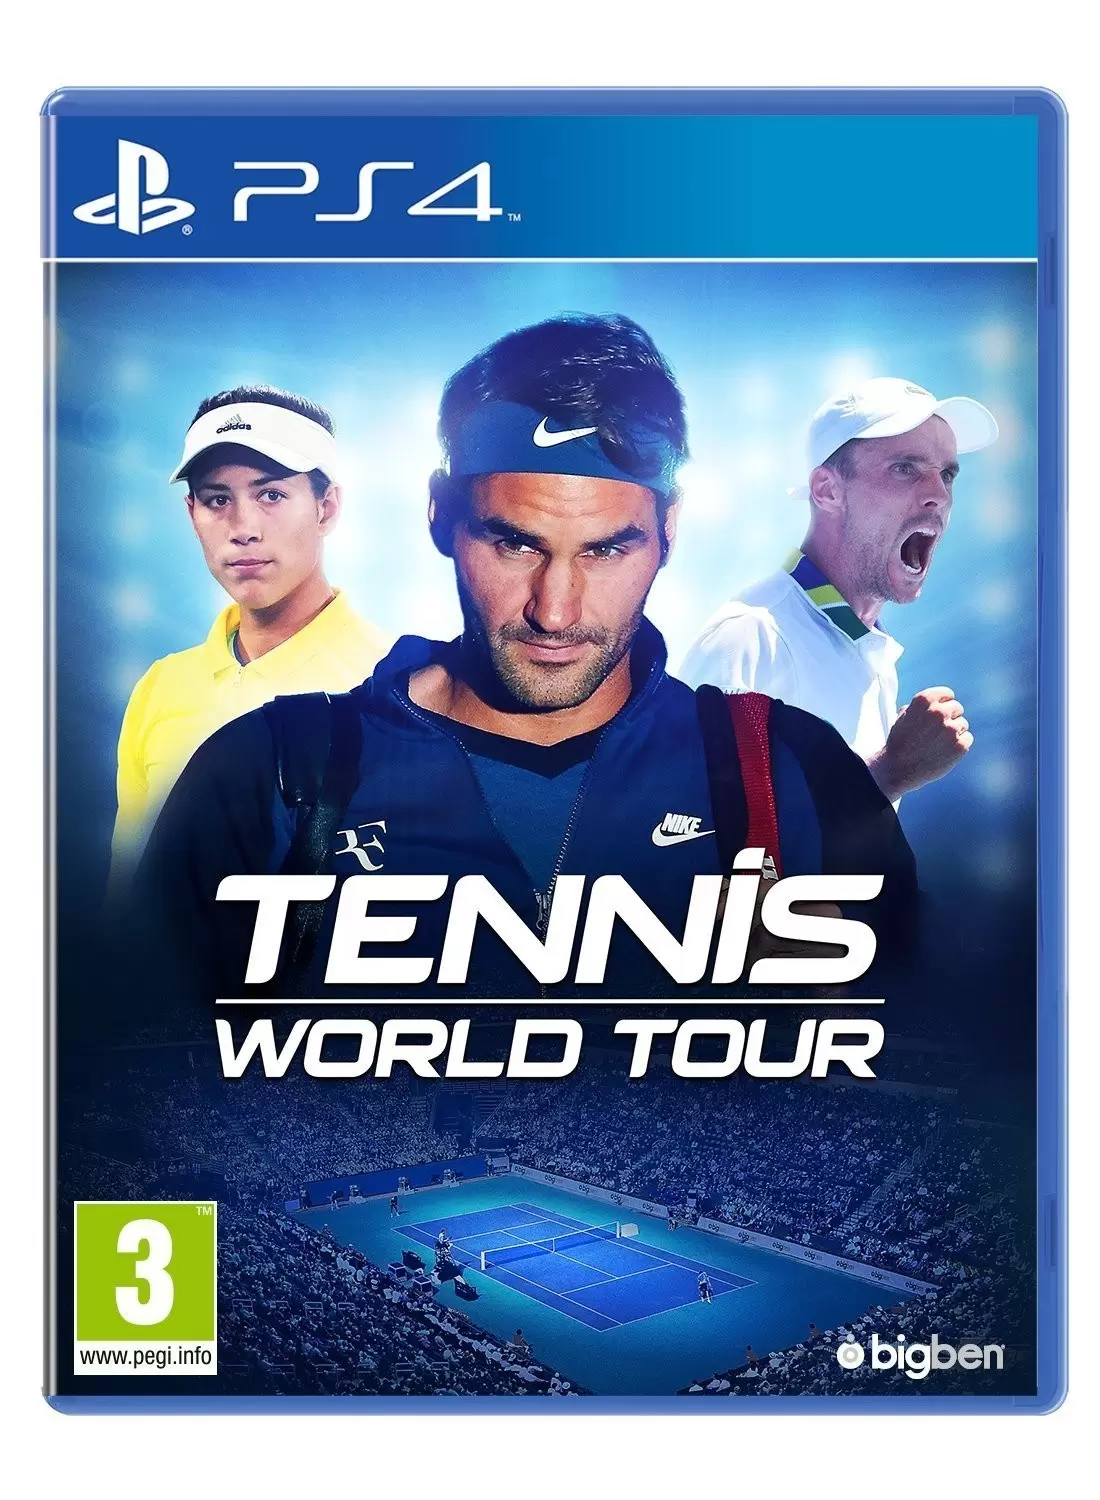 PS4 Games - Tennis World Tour